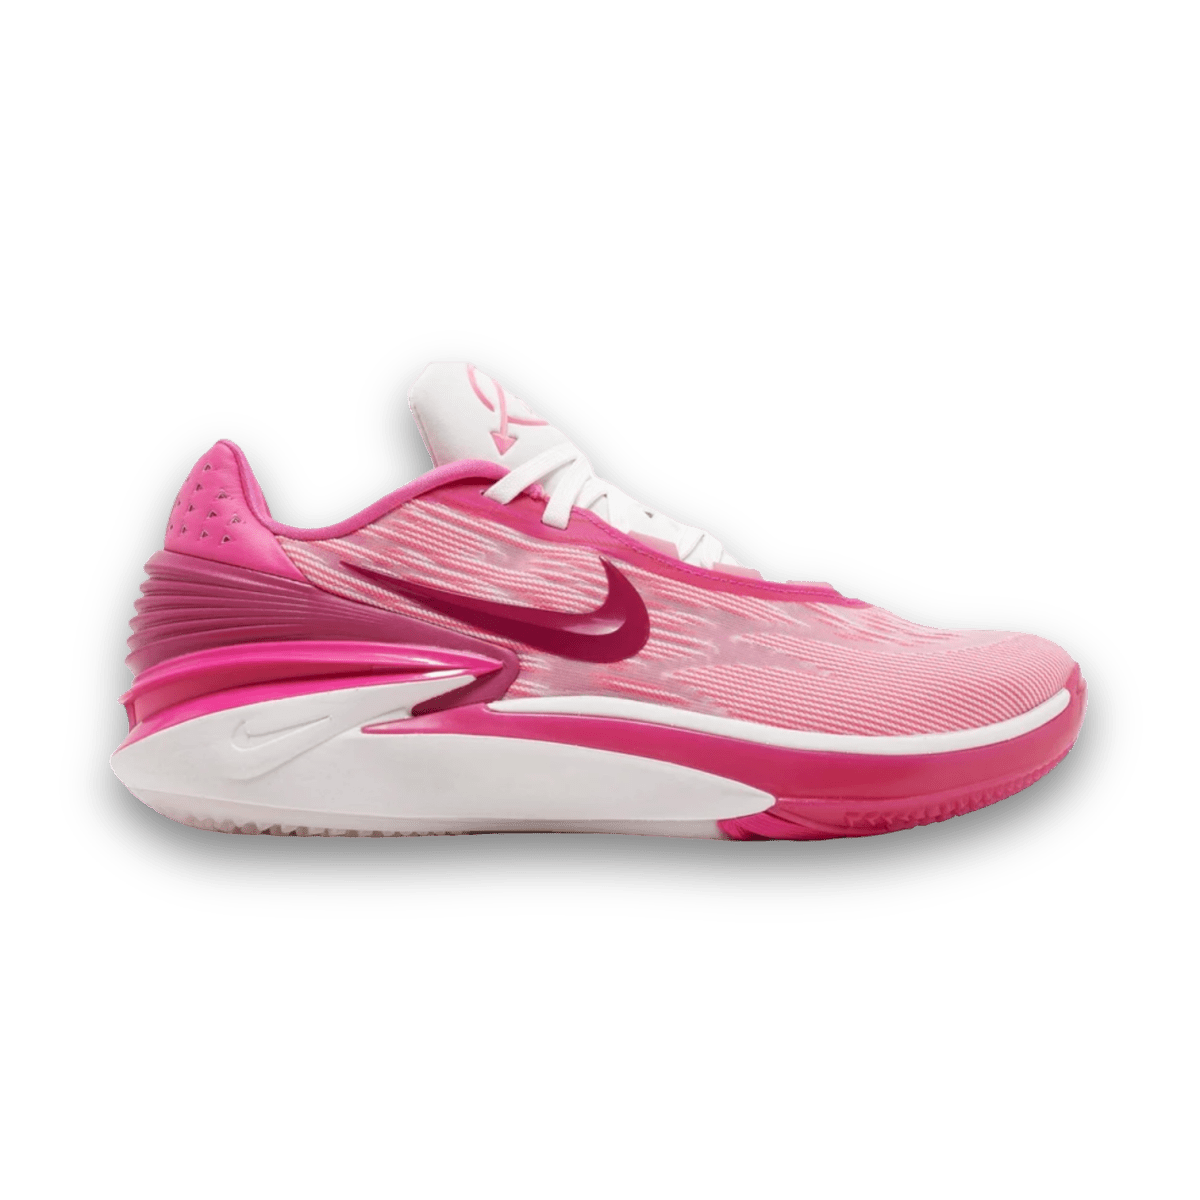 Air Zoom GT Cut 2 EP 'Hyper Pink' - Low Sneaker - Jawns on Fire Sneakers & Streetwear